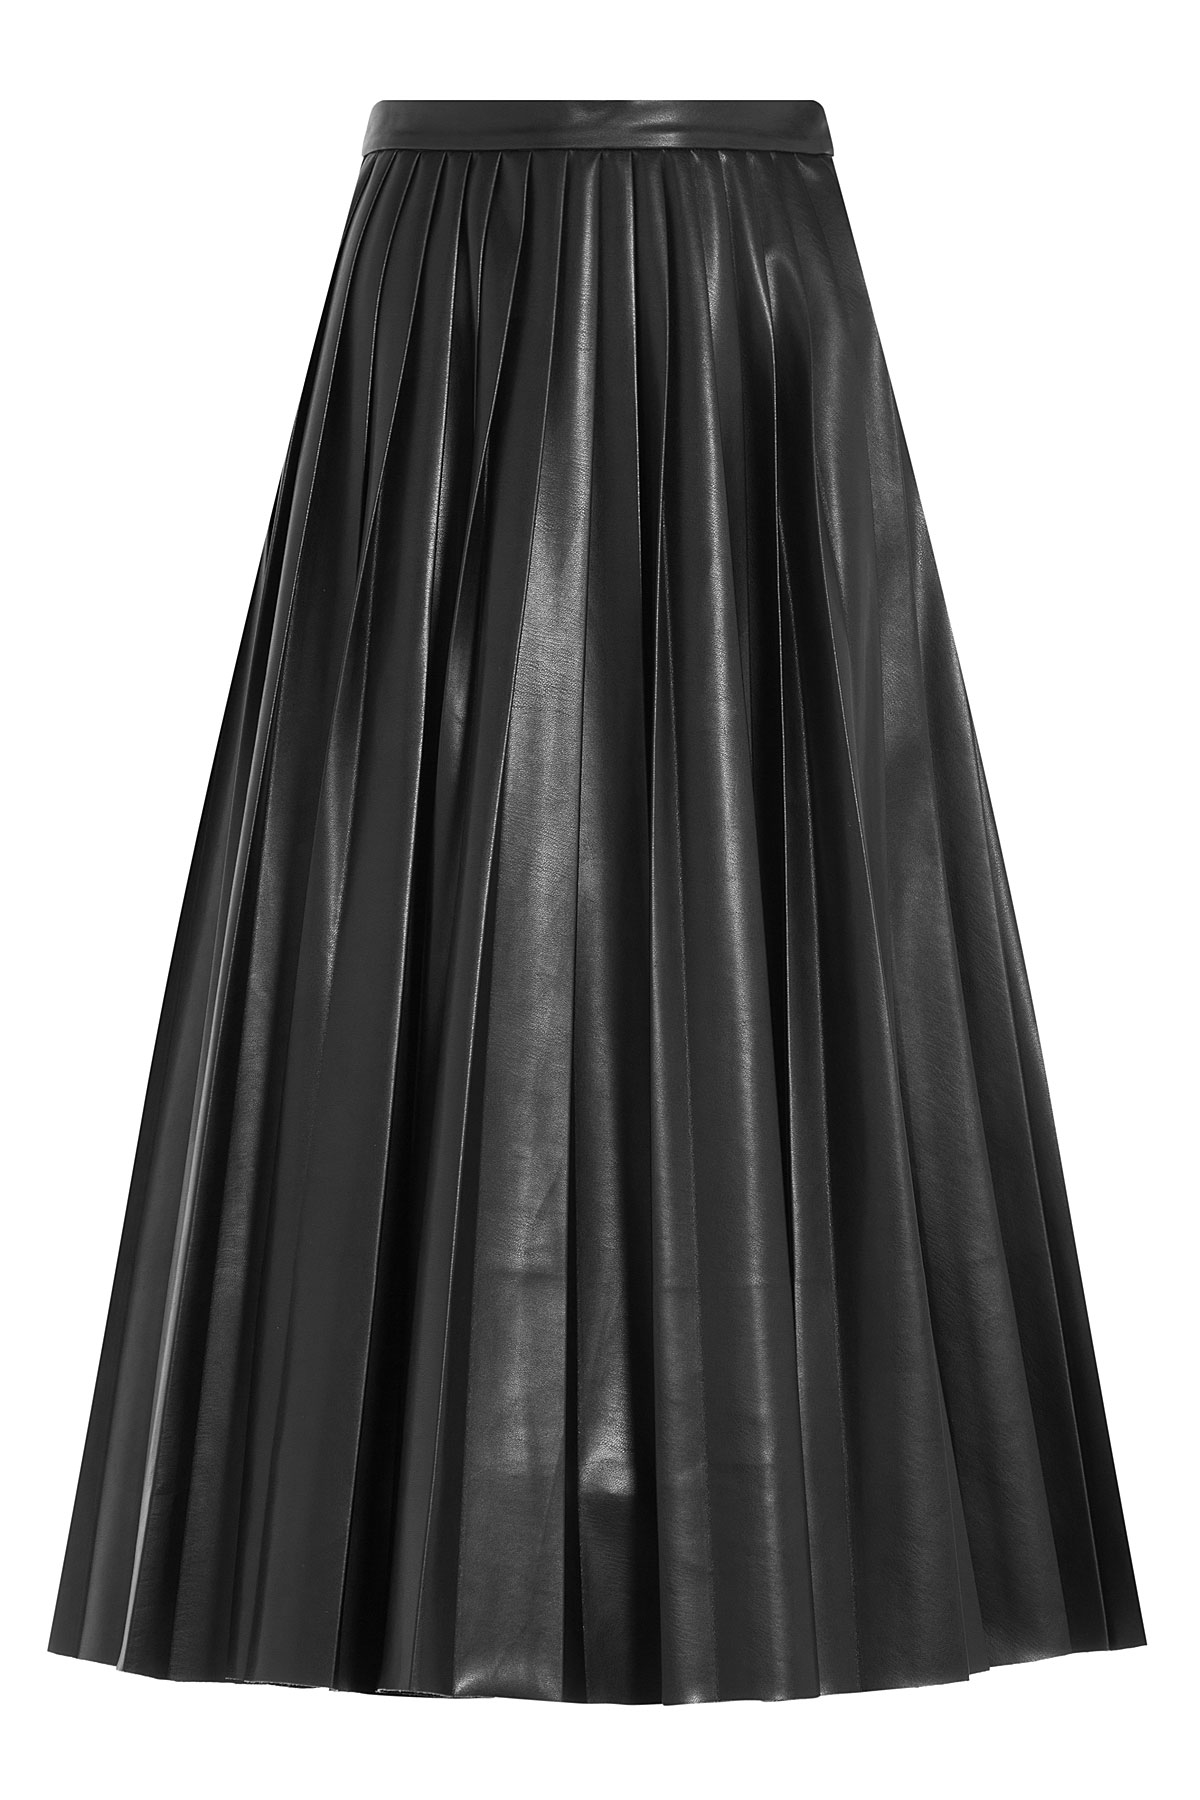 Lyst - By Malene Birger Pleated Faux-leather Midi-skirt - Black in Black